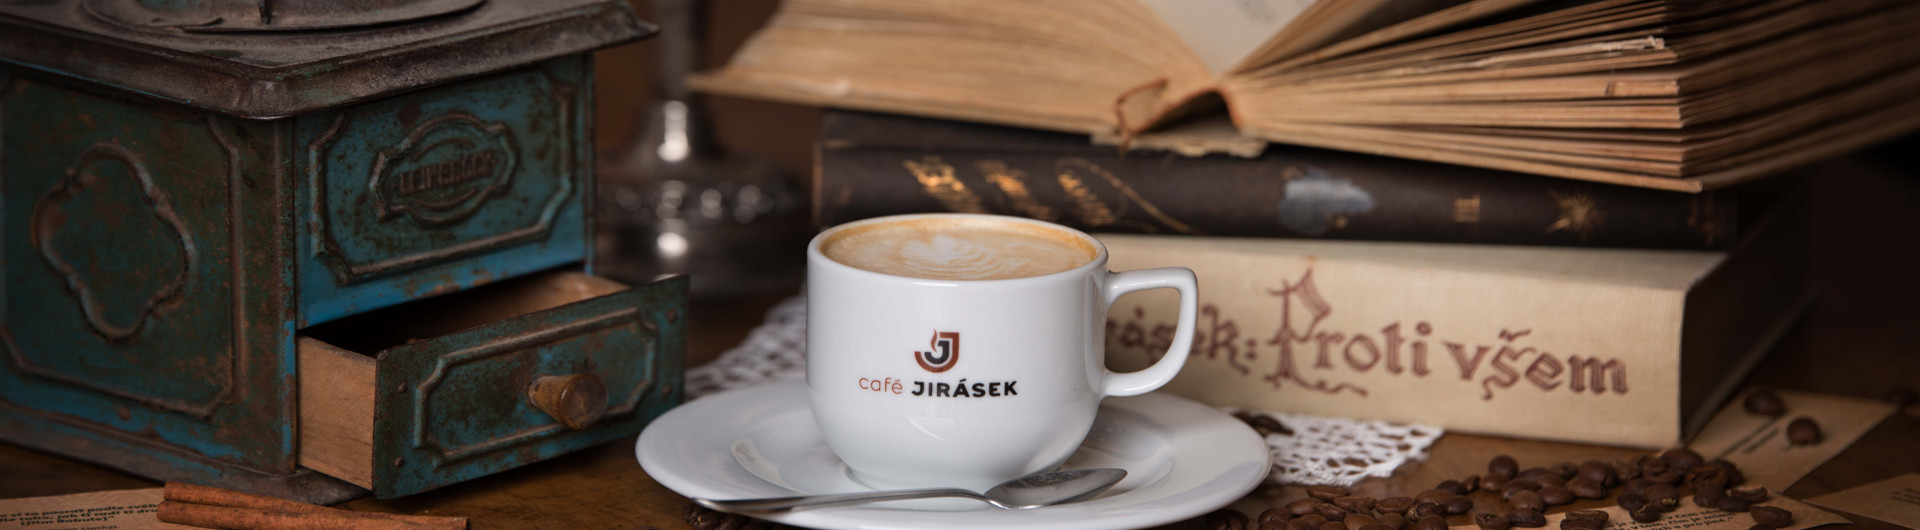 cafe jirasek Praha 6